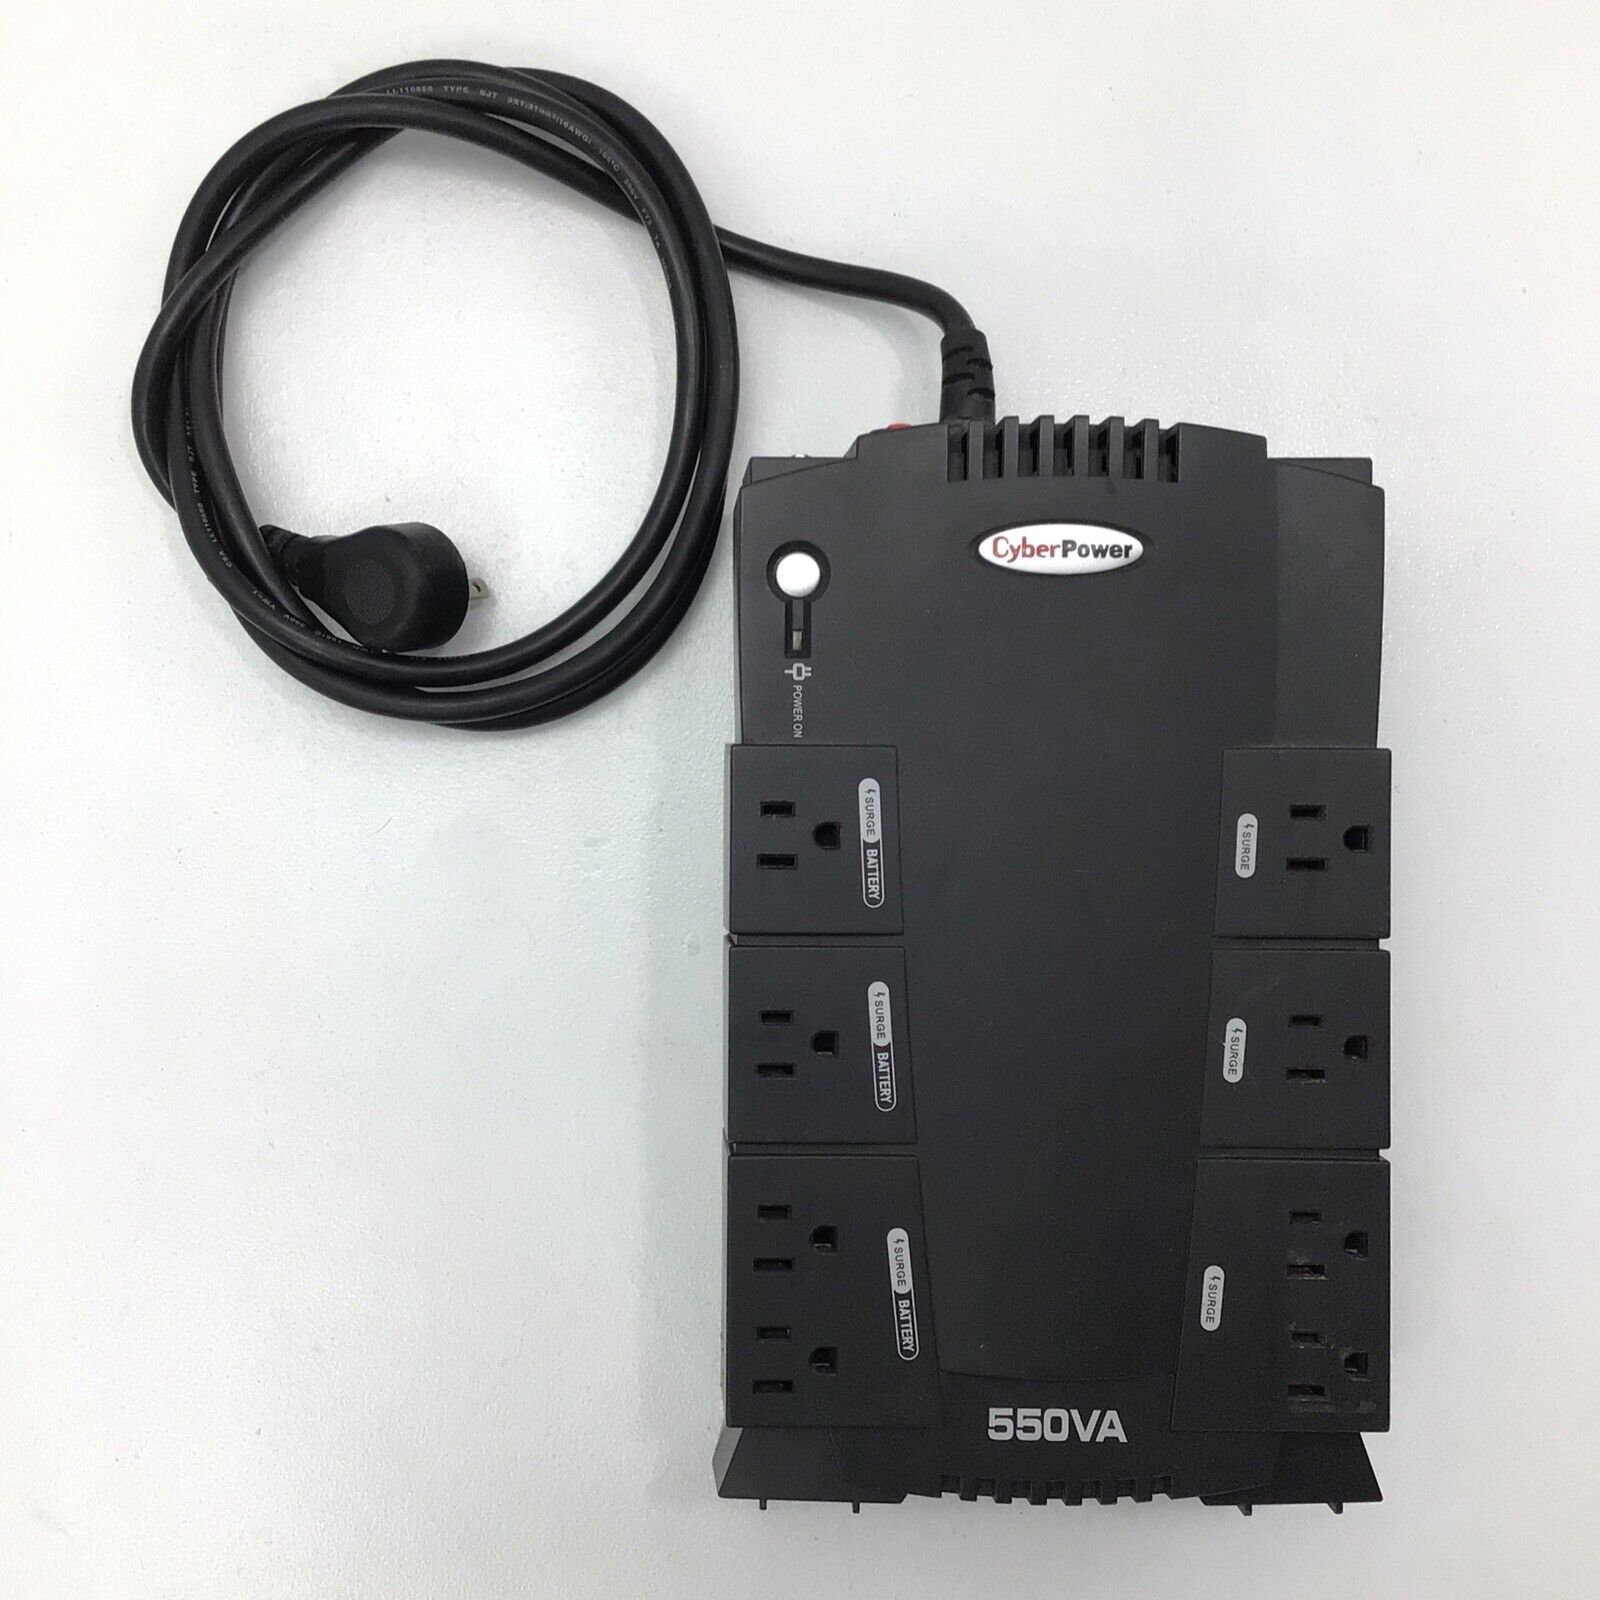 CyberPower Uninterruptable Power Supply - 550VA - 8-Plug 6FT cord No Battery